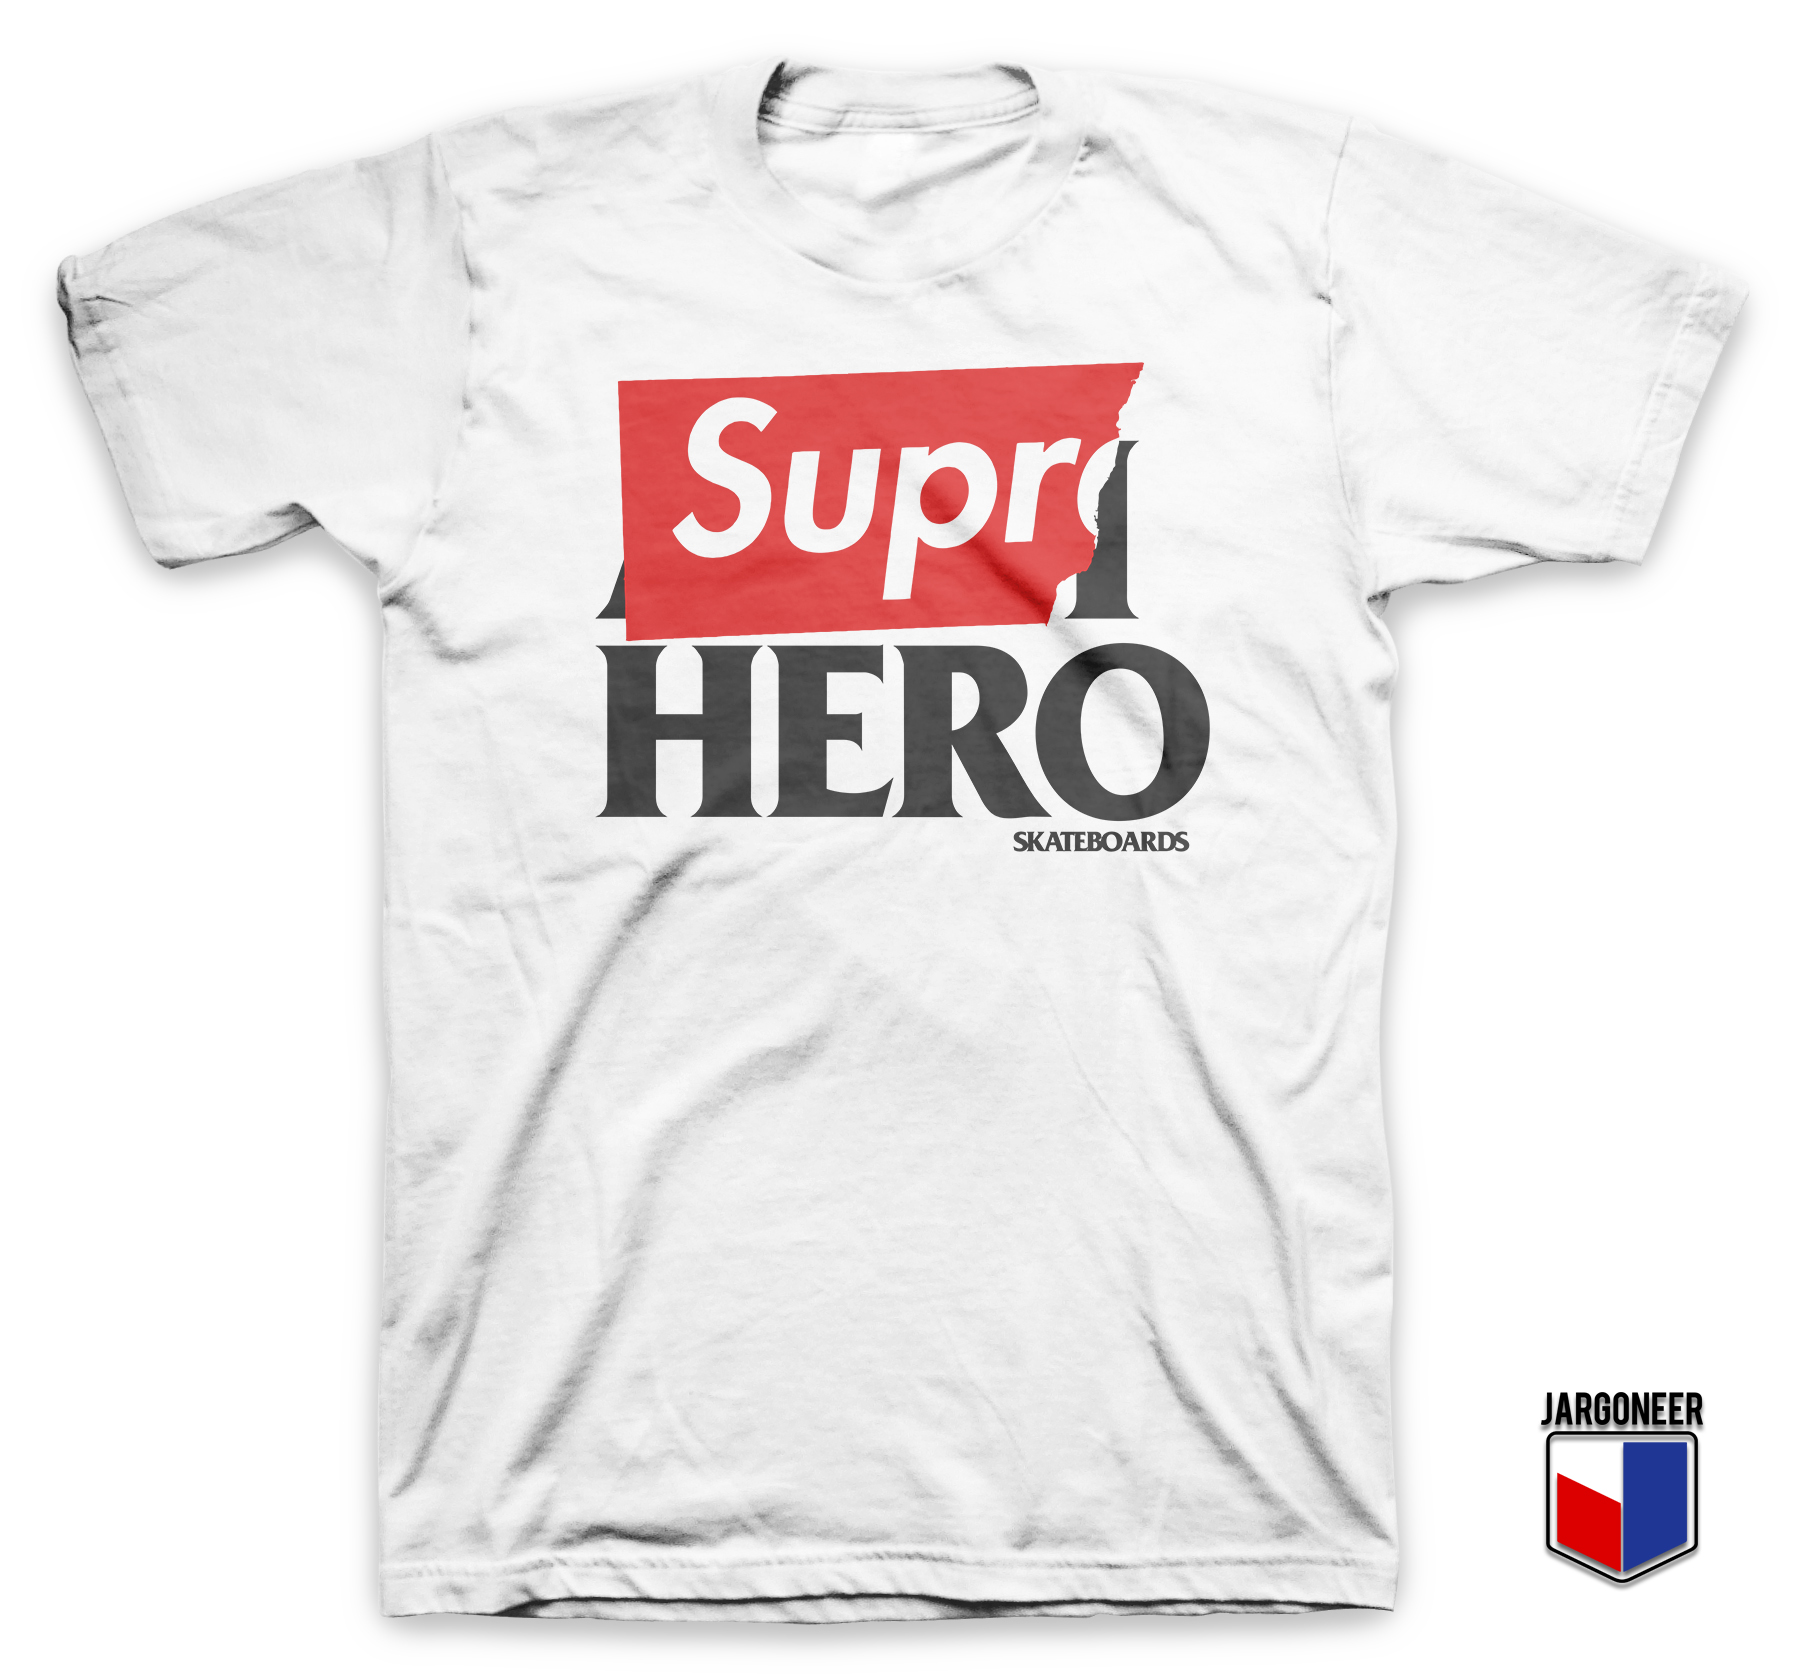 supreme master t shirt design to buy - Buy t-shirt designs